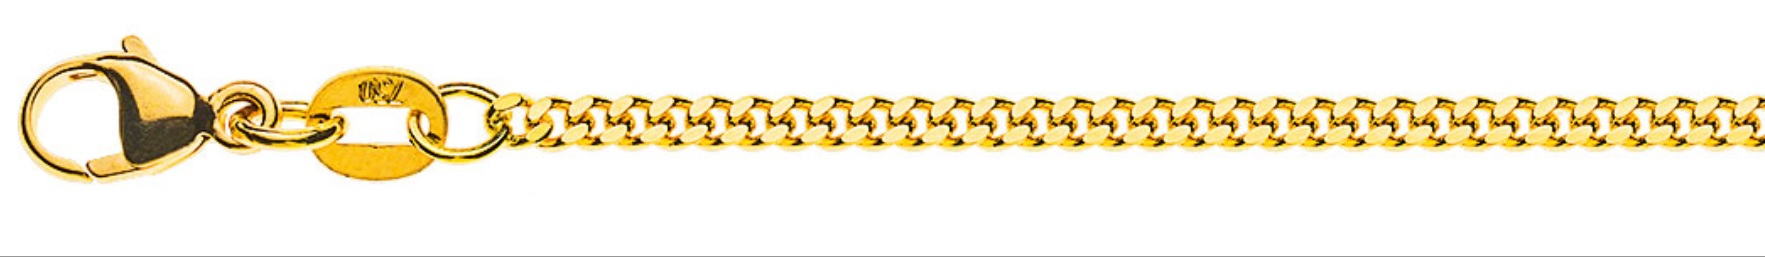 AURONOS Prestige Necklace yellow gold 18K curb chain polished 55cm 2.0mm